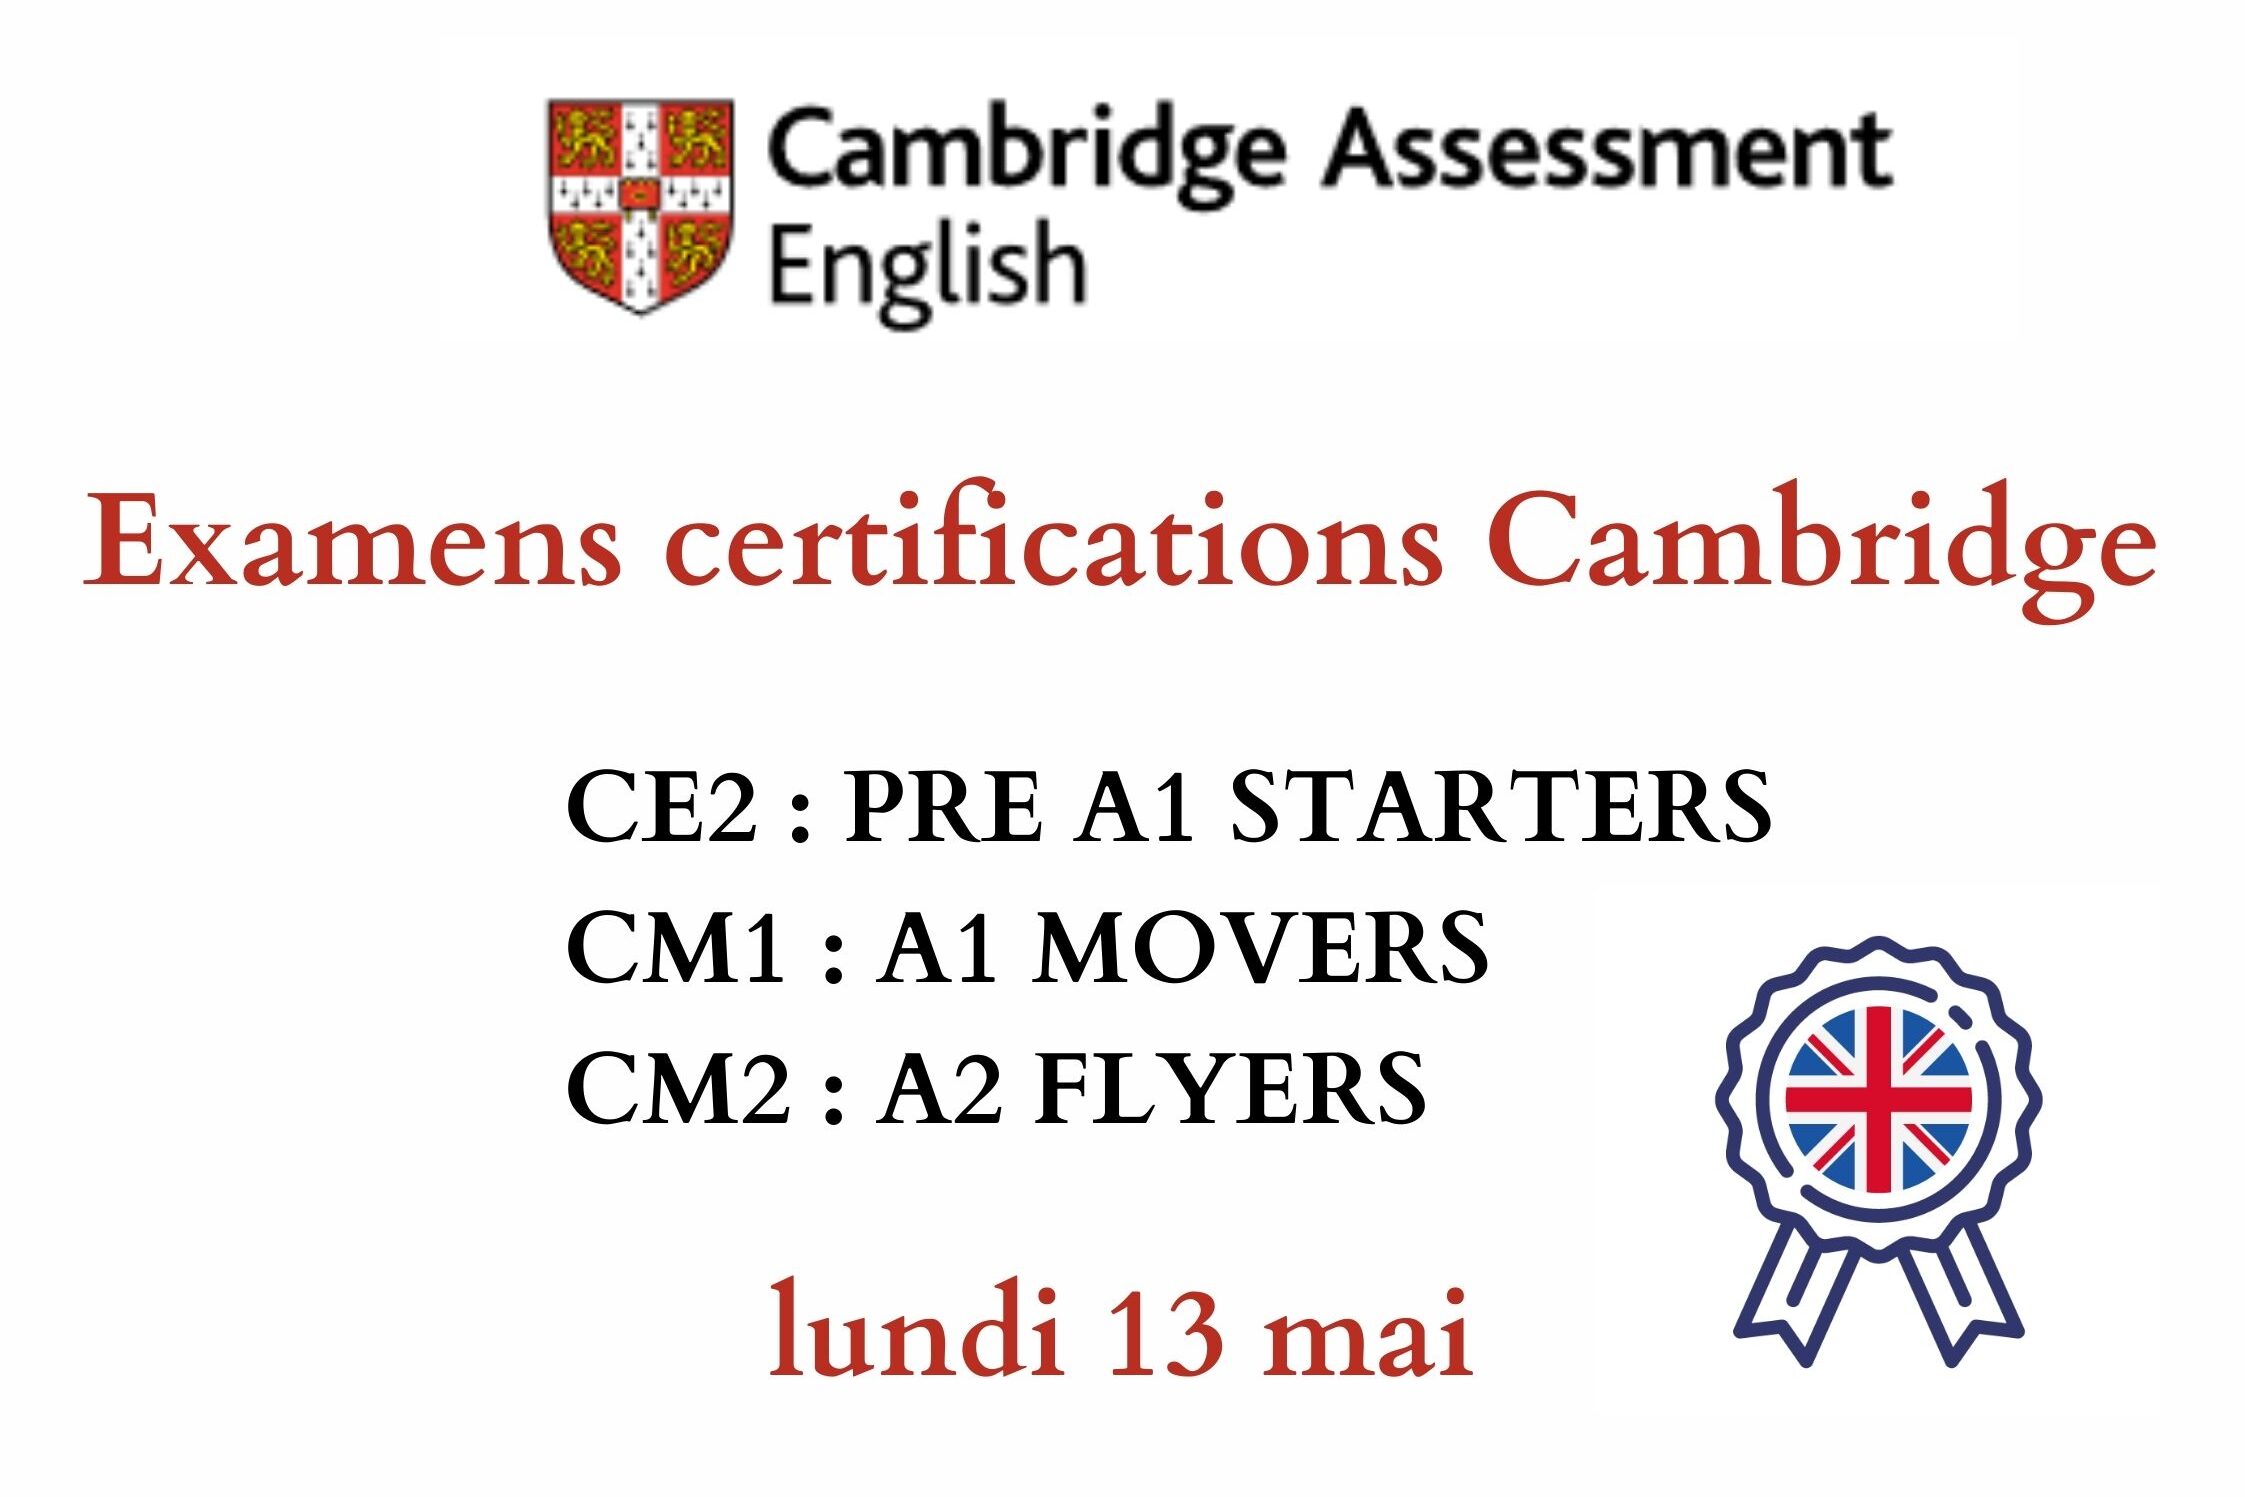 Examens certifications Cambridge